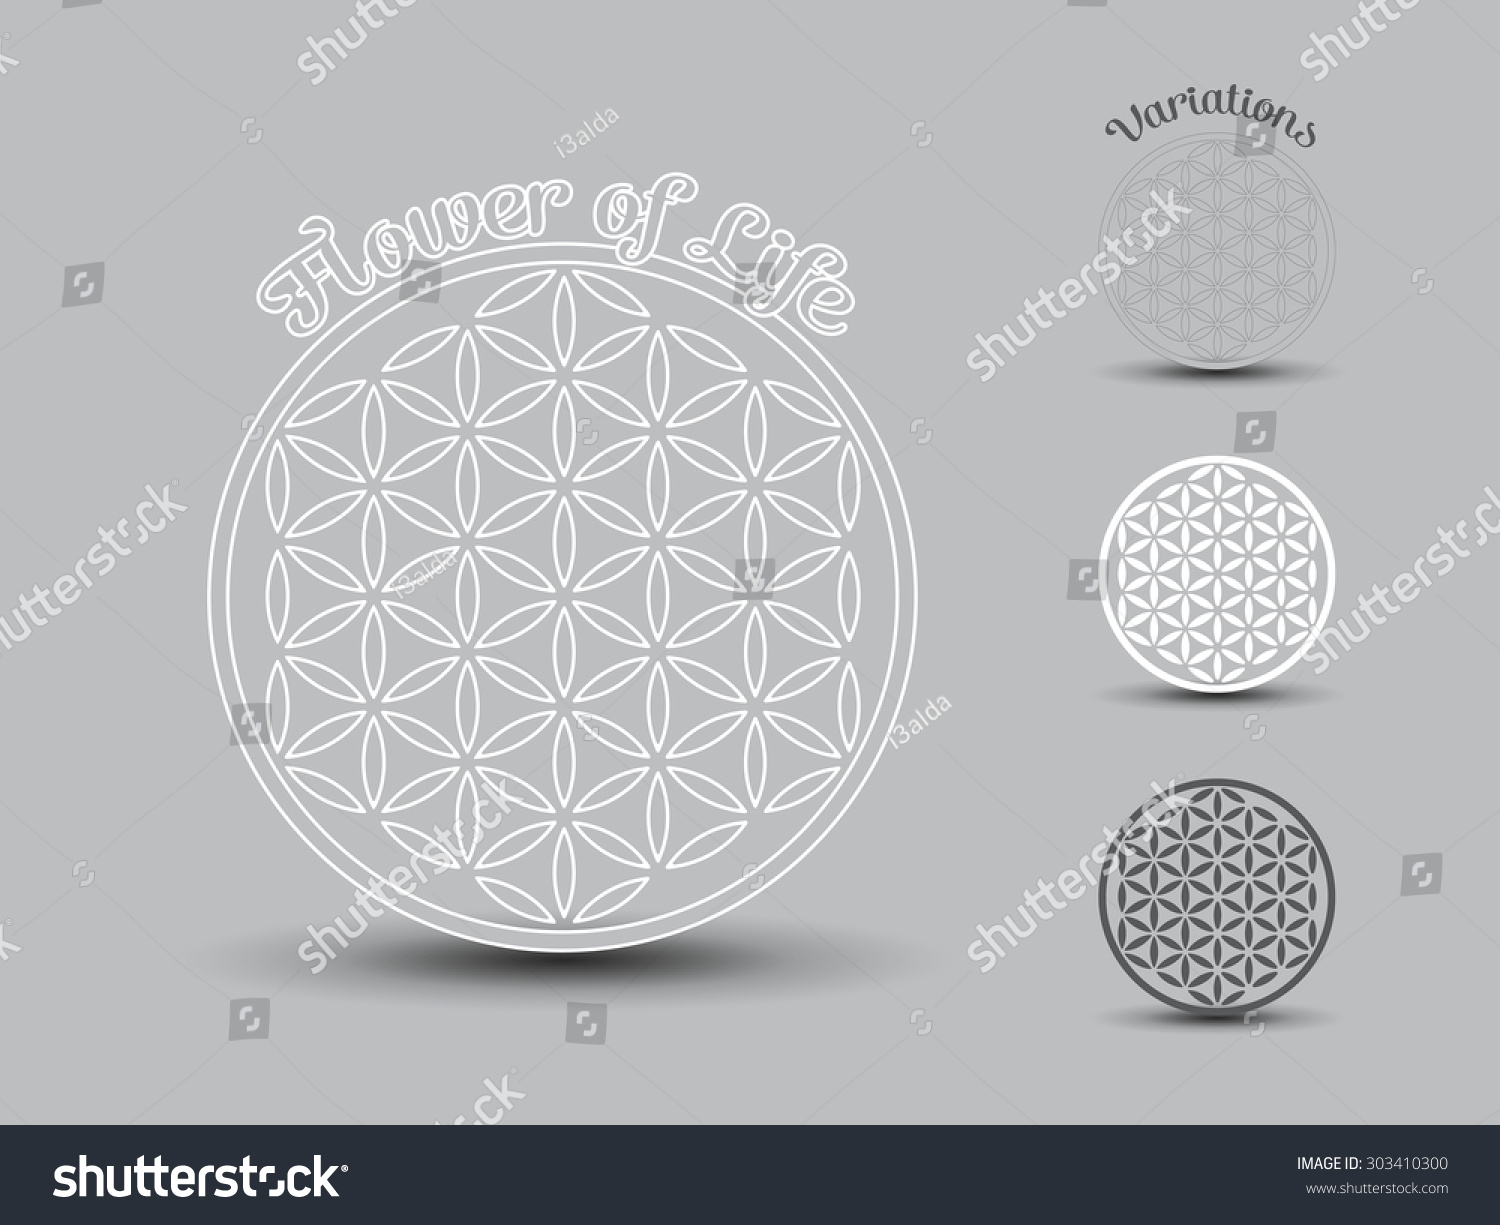 Flower Of Life Symbol, Set Of Stock Vector 303410300 : Shutterstock